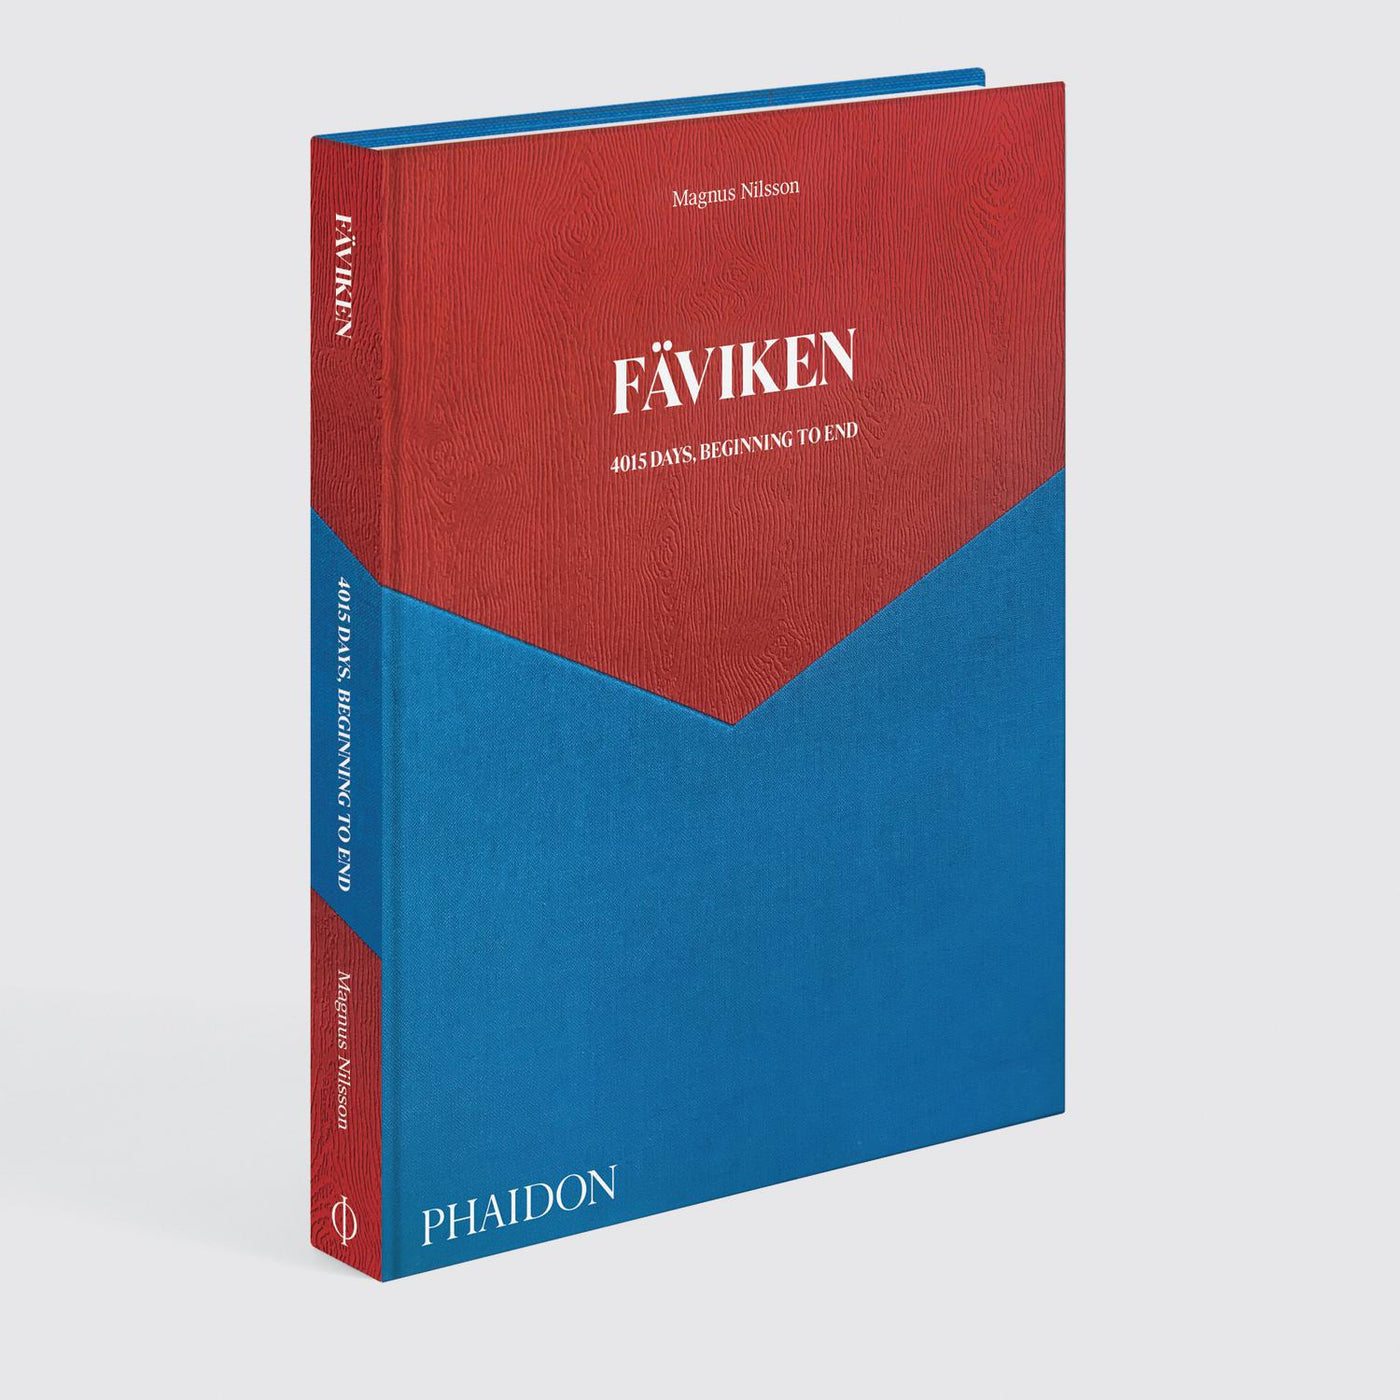 Faviken - 4015 Days, Beginning to End